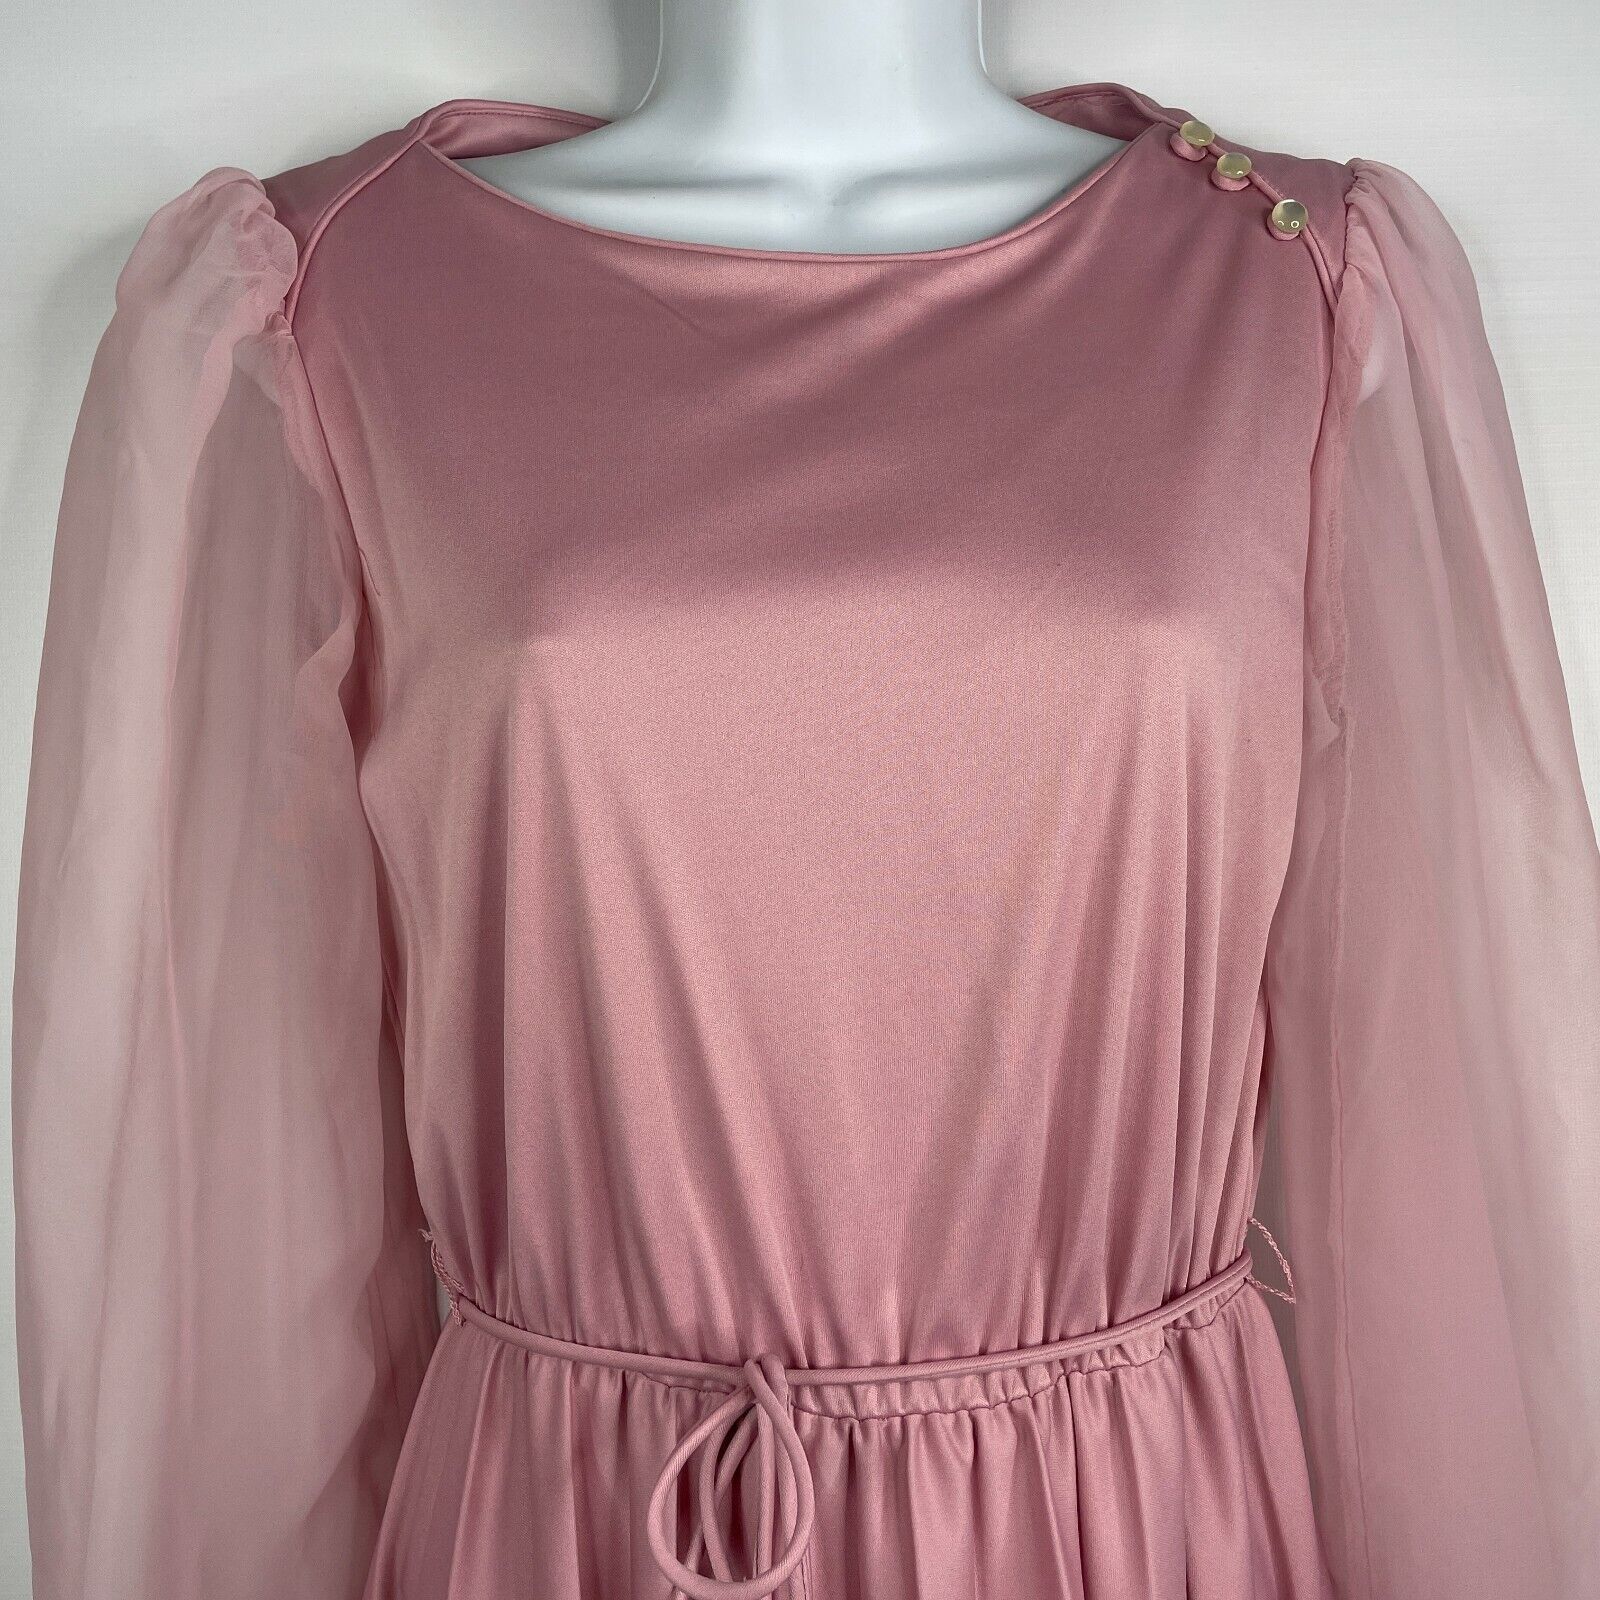 Vintage 70s Lavender Belted Contrast Stich Pleat Fit Flare Dress Size L / US 10 / IT 46 - 2 Preview